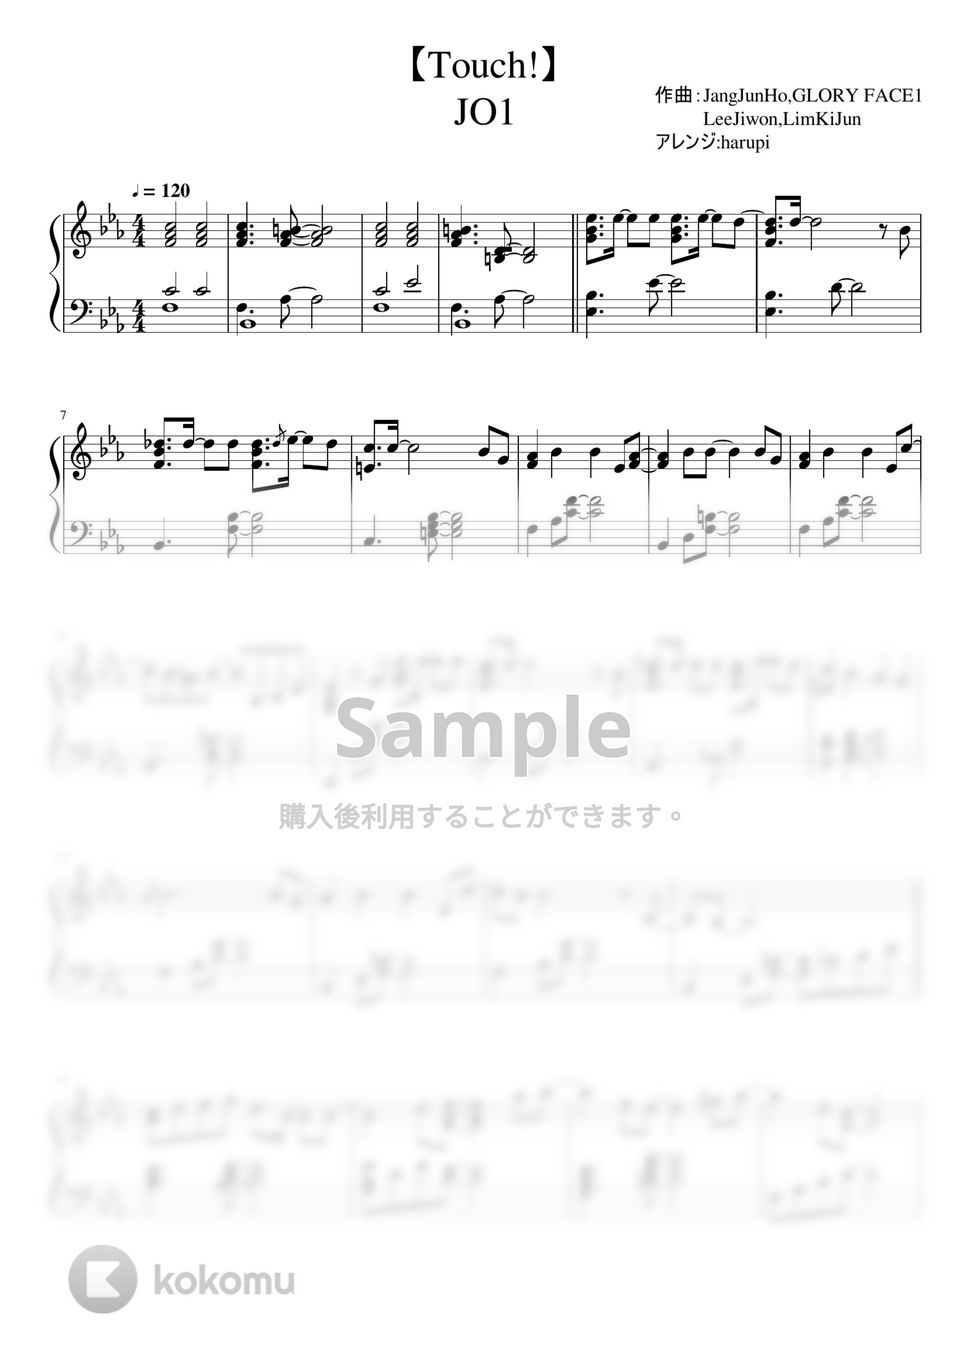 JO1 - Touchi！ (ピアノソロ) by harupi